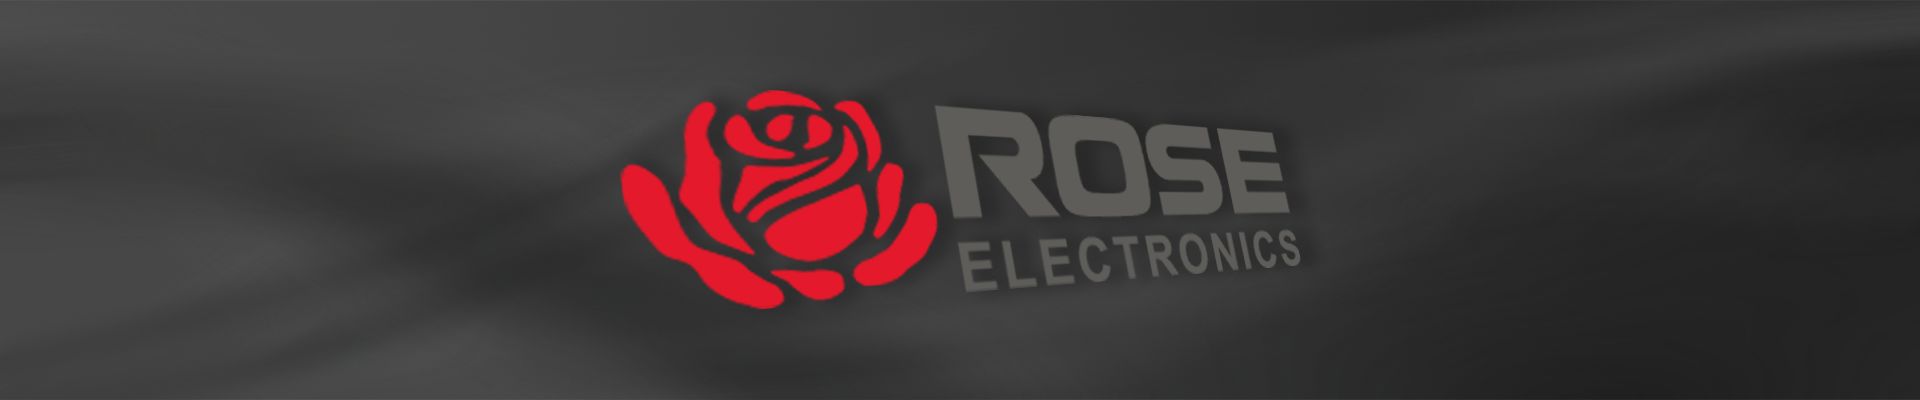 Rose Electronics Banner